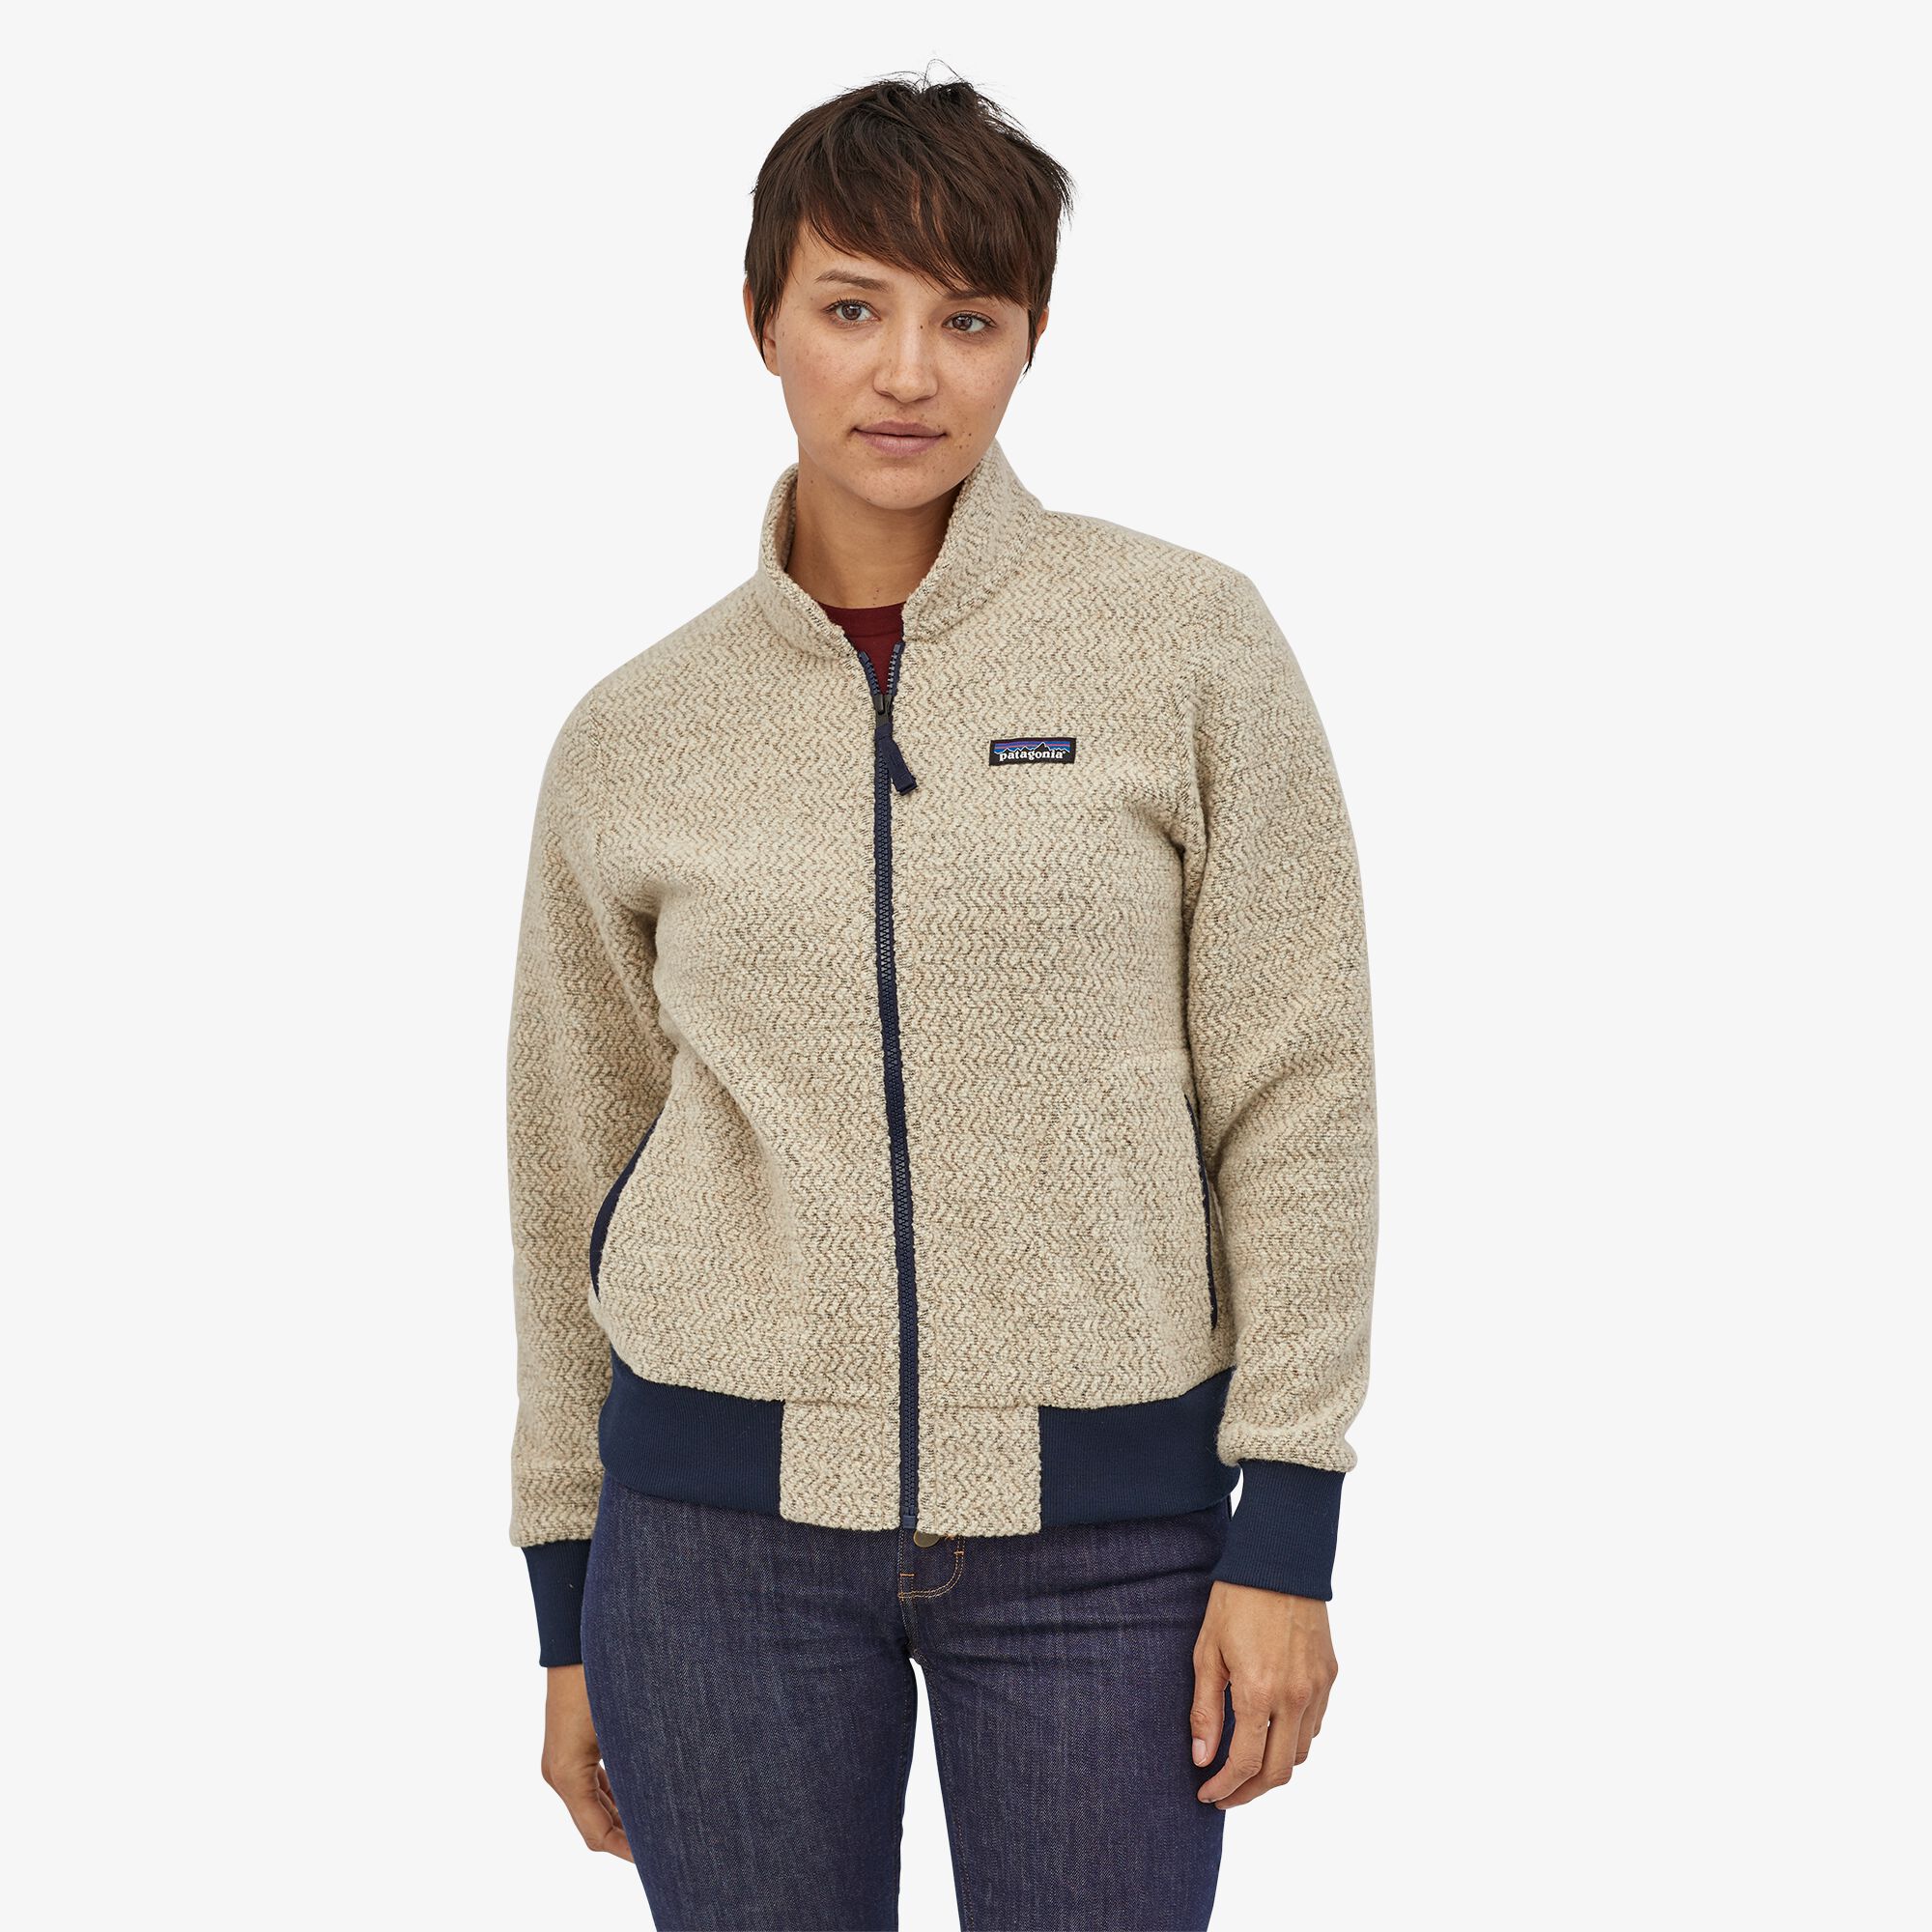 Patagonia Women's Woolyester Fleece Jacket